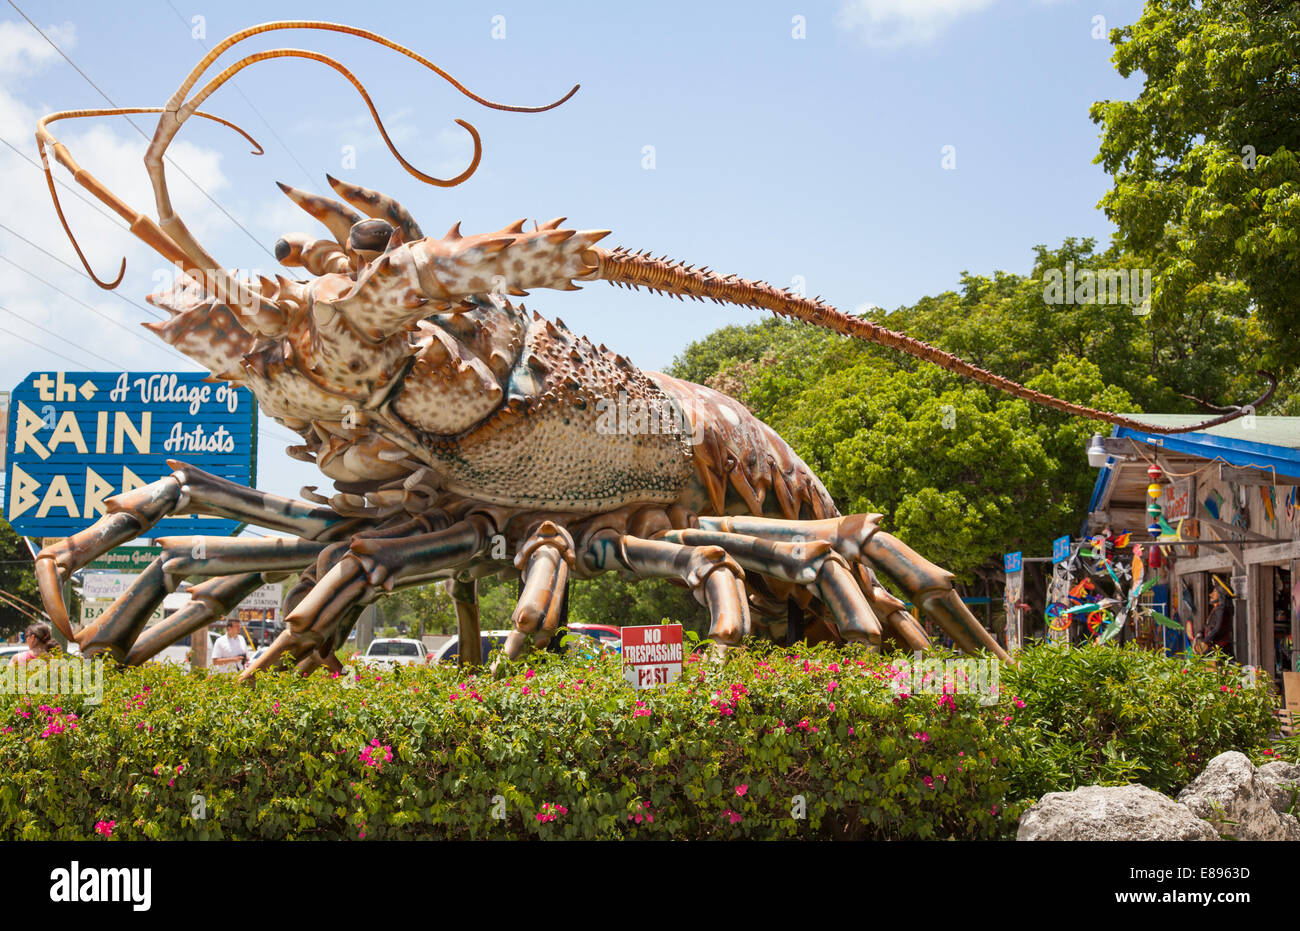 Giant Florida Spiny Lobster sculpture att he Rain Barrel shops on Islamorada in the Florida Keys Stock Photo